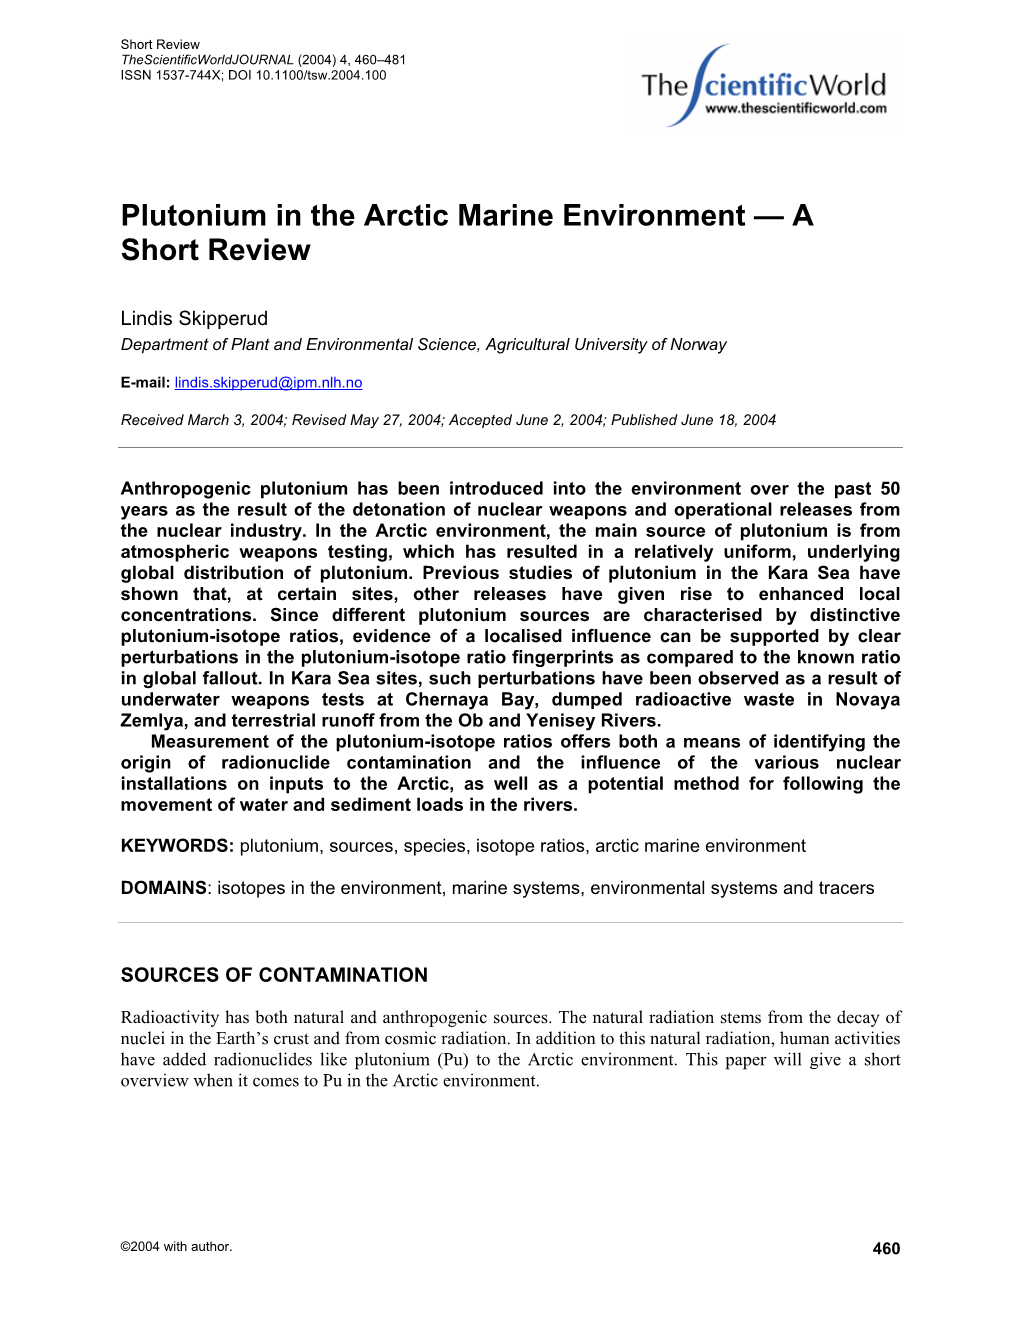 Plutonium in the Arctic Marine Environment — a Short Review